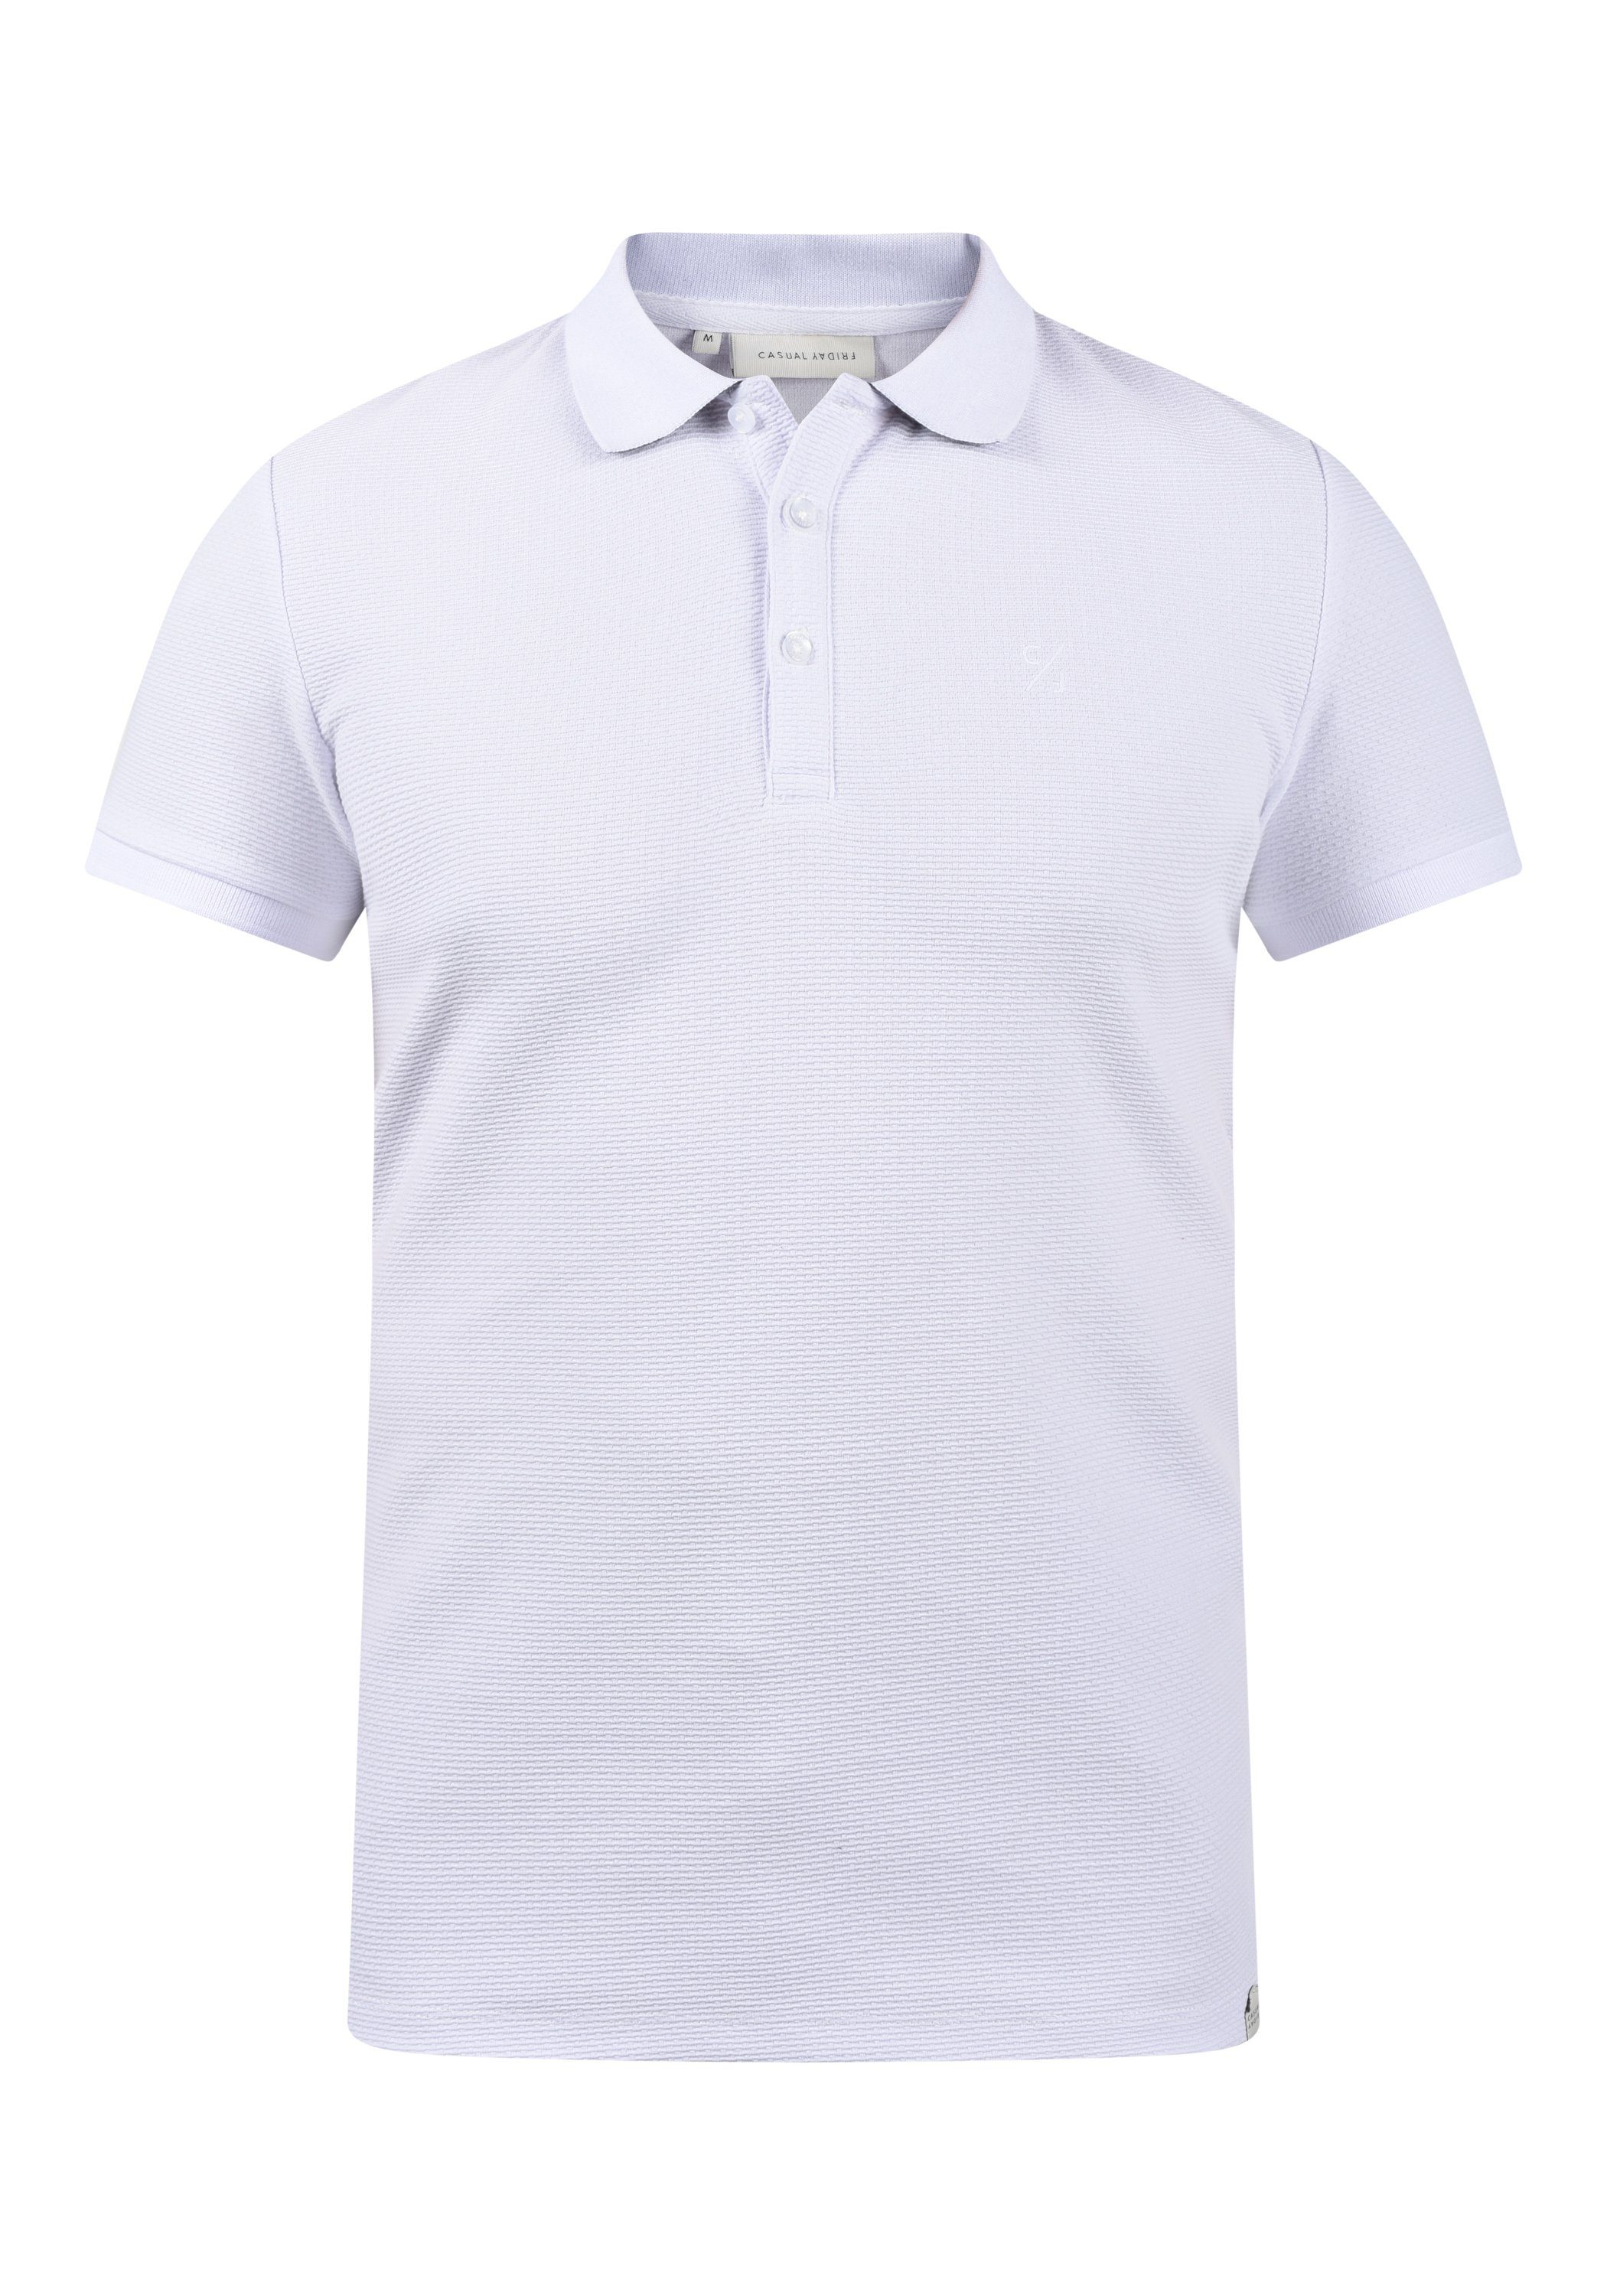 - Details Friday (50104) mit Casual 20503366 modischen CFTurner Bright Poloshirt white Polo